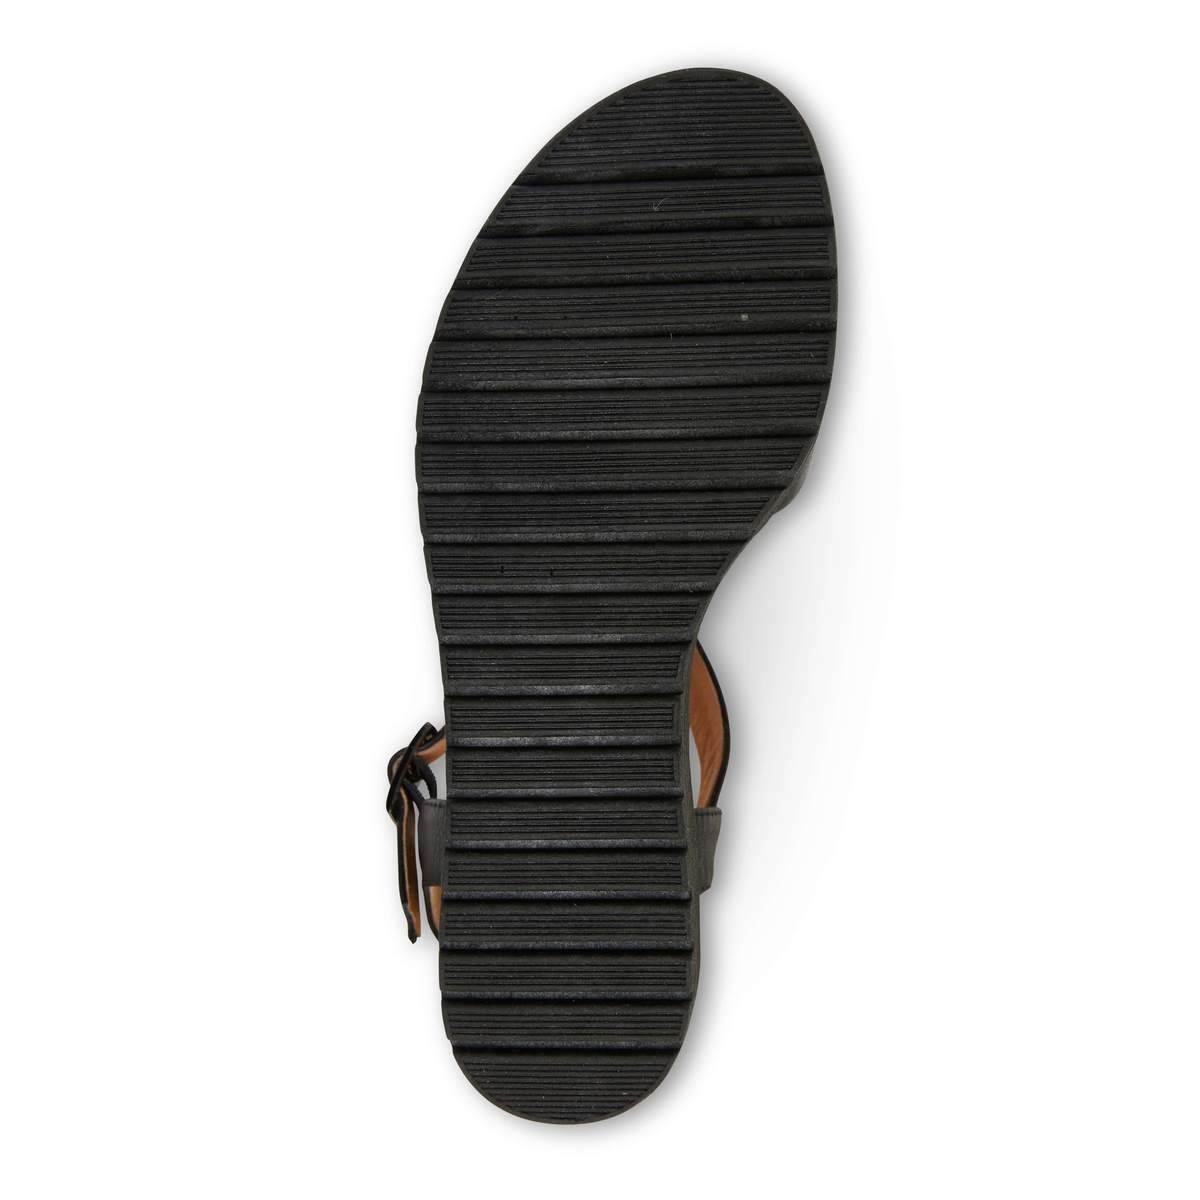 GEORGIE leather sandal - Easy Step - 36, 37, 38, 39, 40, 41, BLACK, TAN, womens footwear - Stomp Shoes Darwin